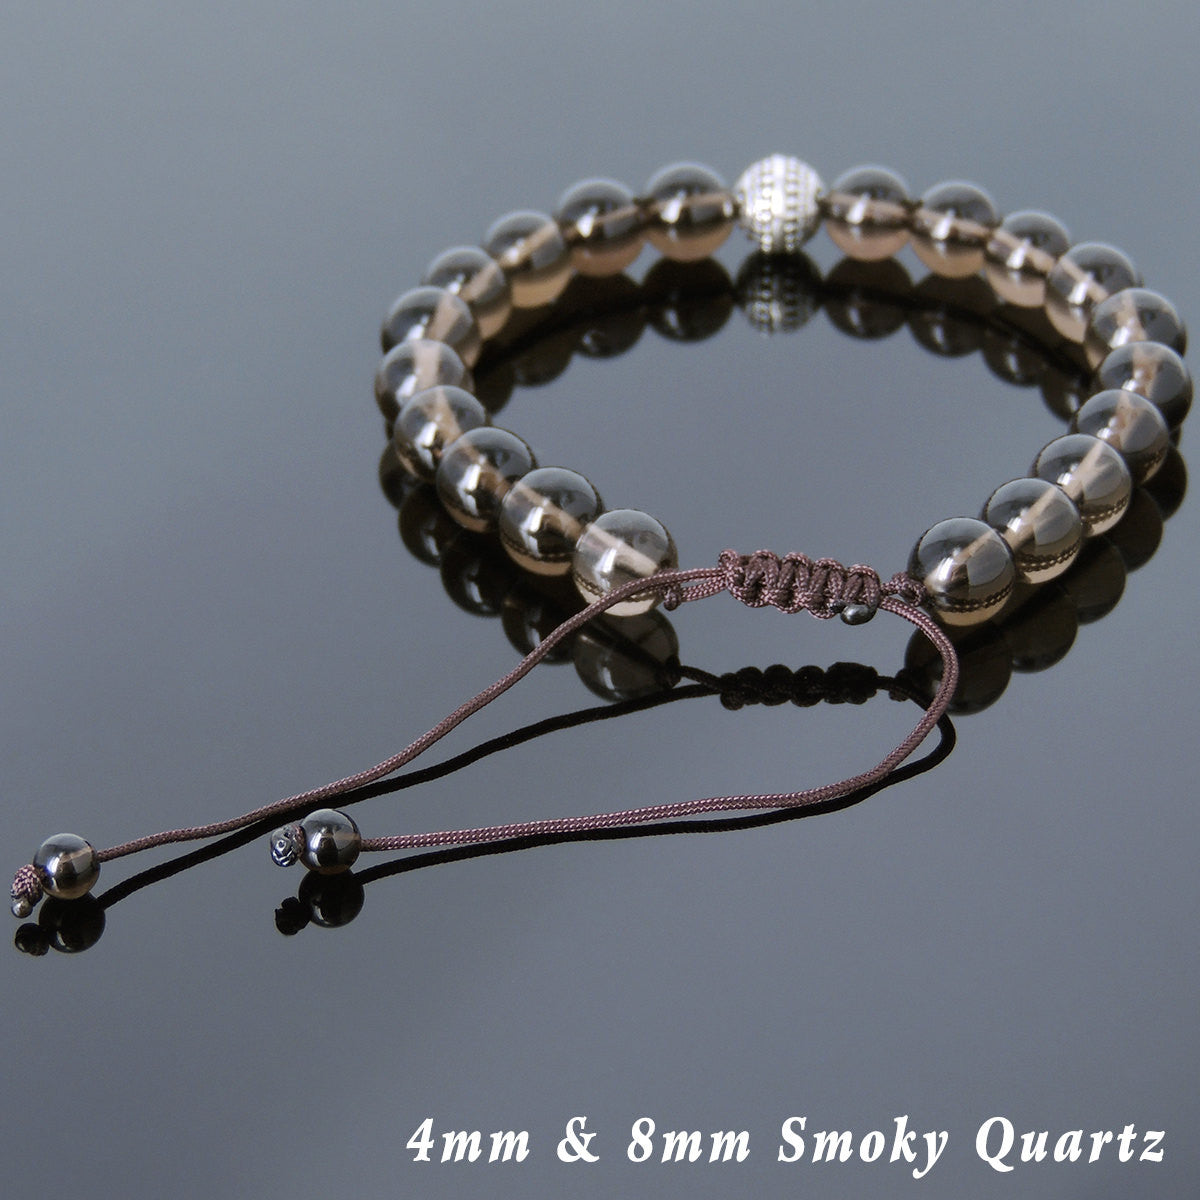 Smoky Quartz Adjustable Braided Healing Gemstone Bracelet with S925 Sterling Silver Artisan Bead - Handmade by Gem & Silver BR827